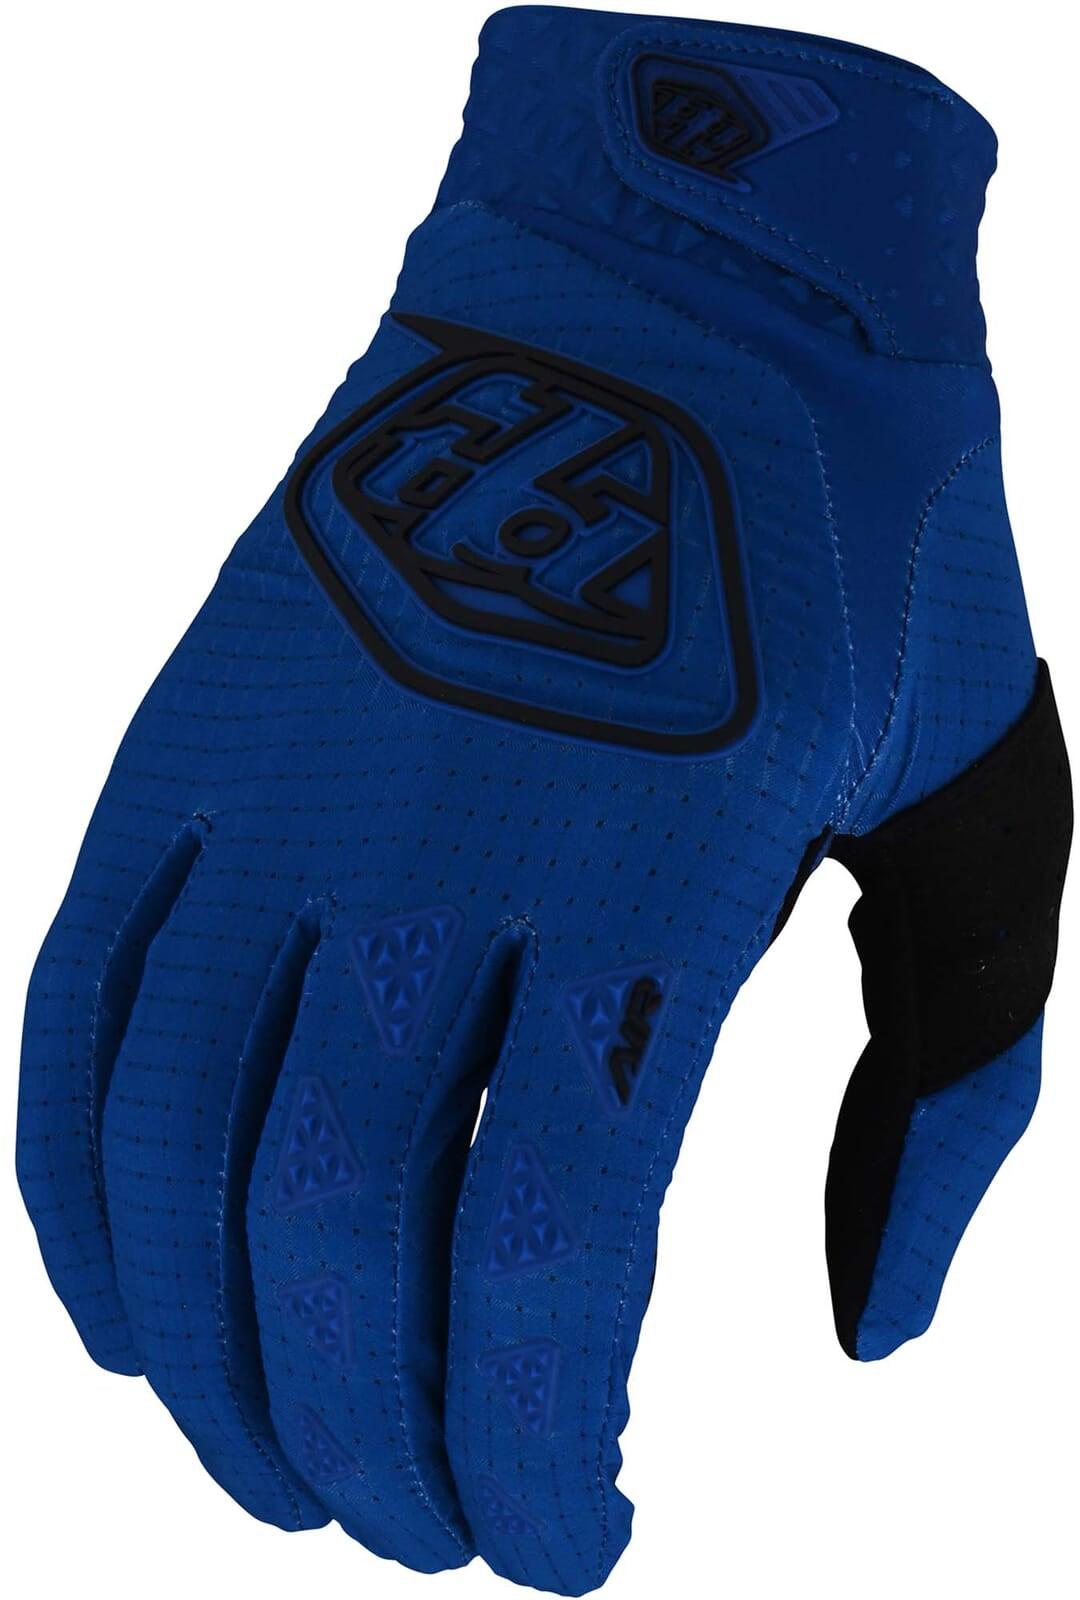 Troy Lee Designs Air Gloves - Blue